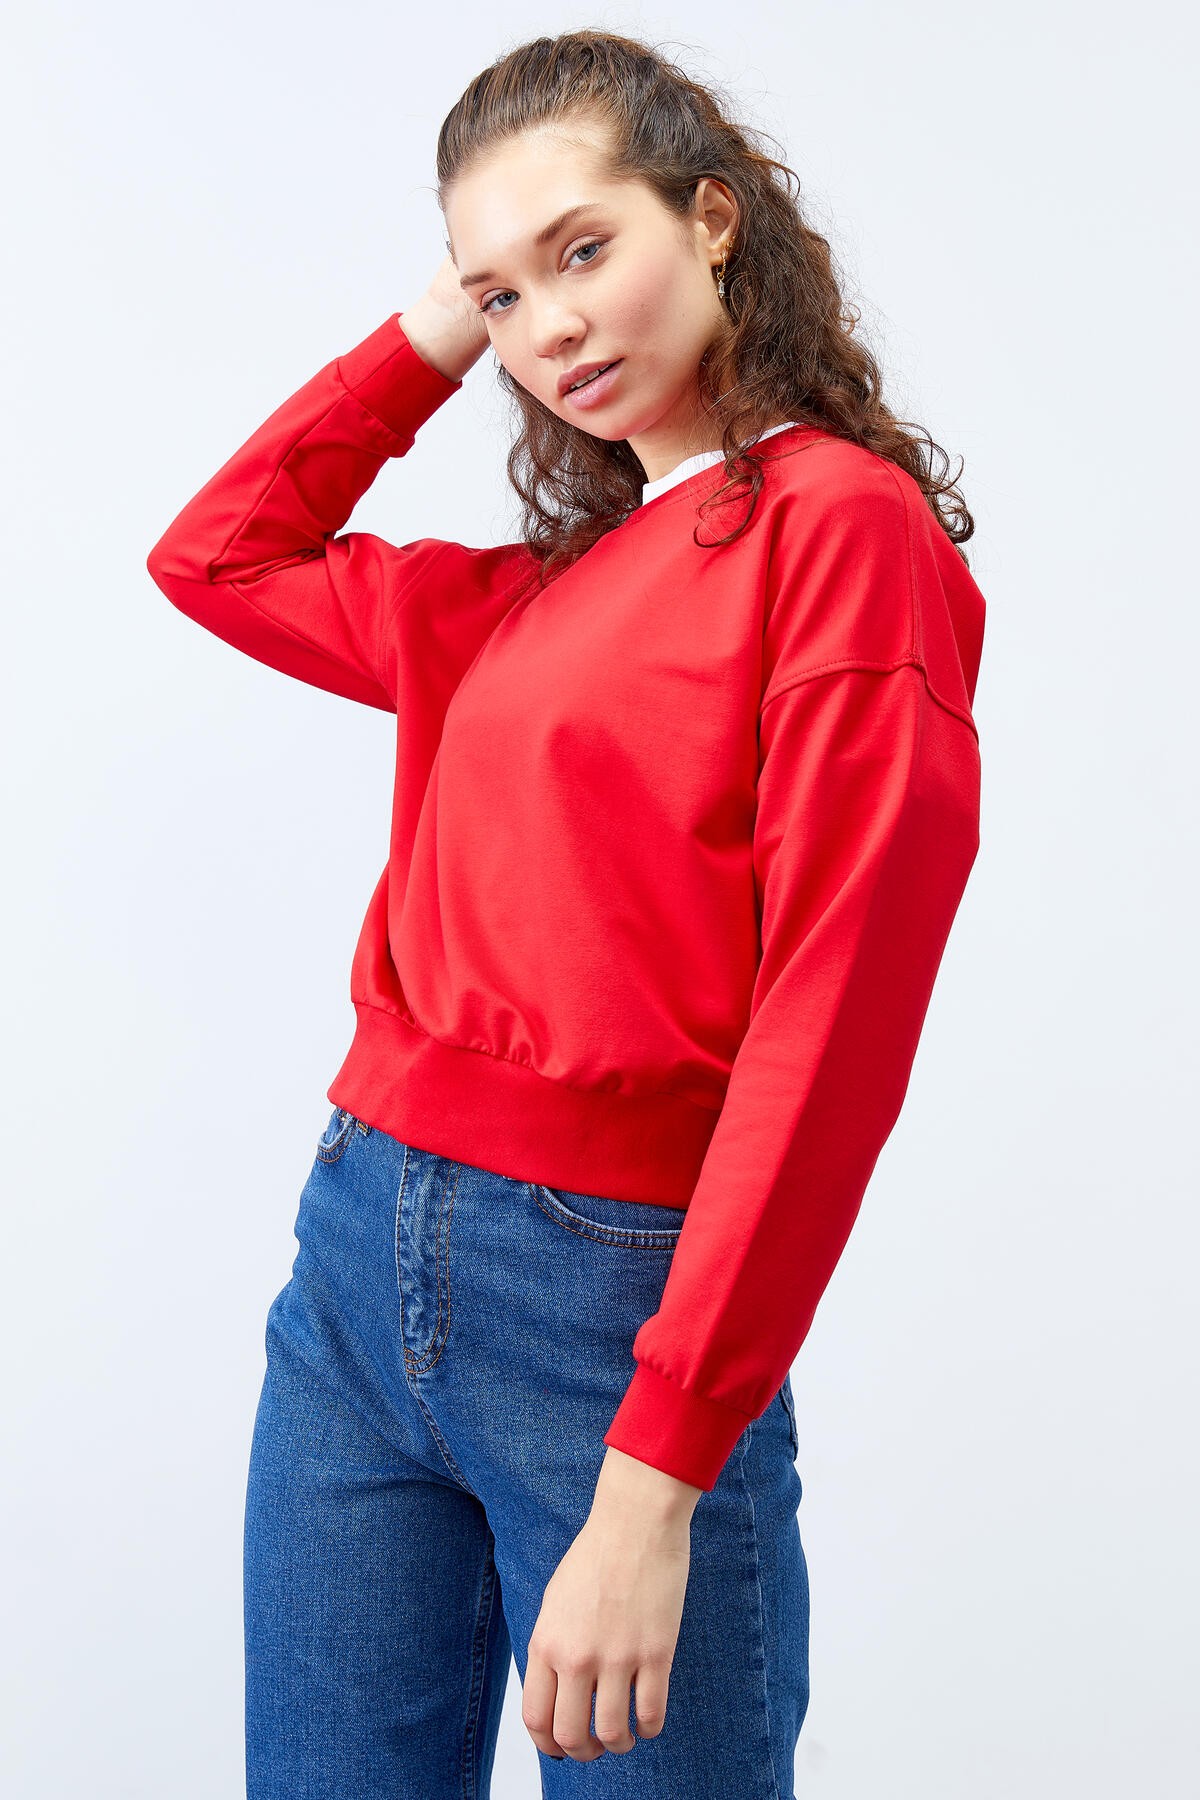 TommyLife - Kırmızı Basic Rahat Form O Yaka Kadın Sweatshirt - 97114